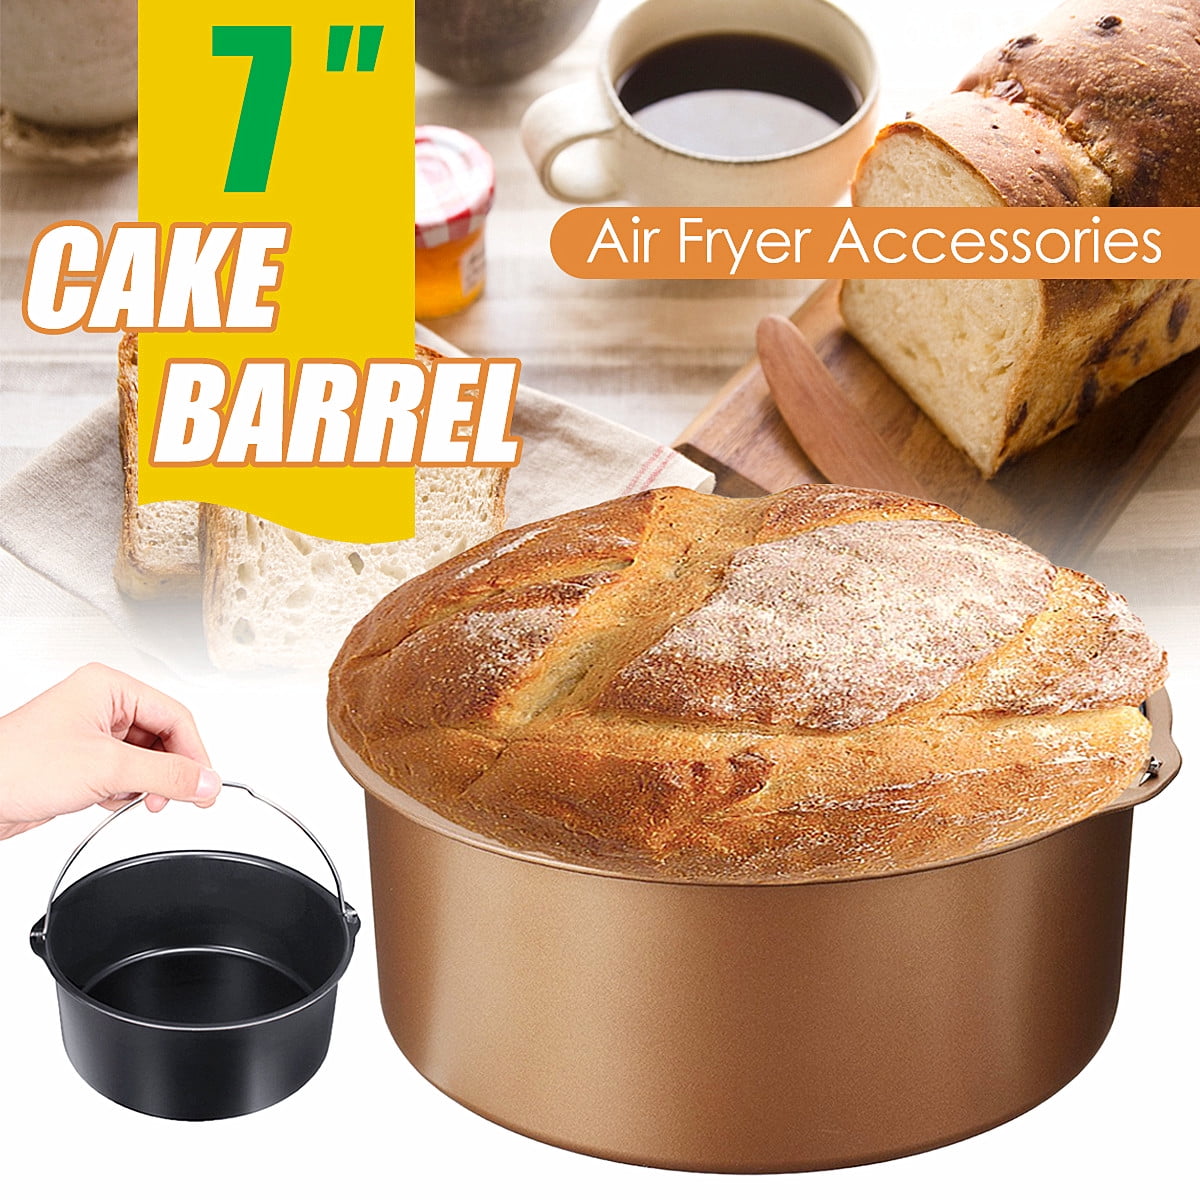 Cake Barrel Air Fryer Accessories Air Frying Pan Fryer Bread Baking Basket kasd